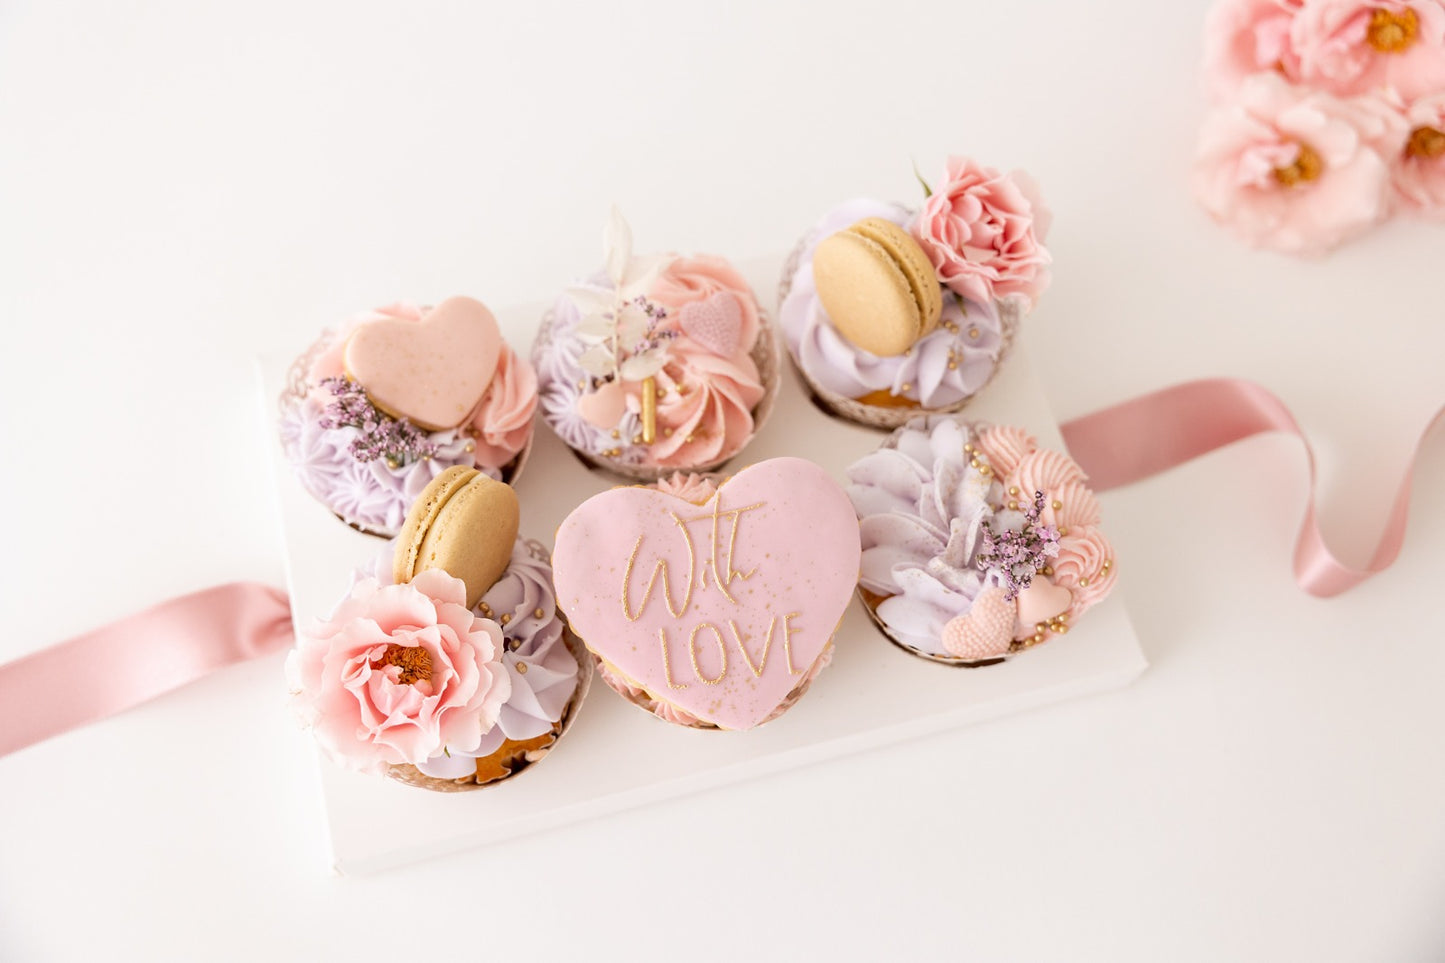 Crazy in love cupcake box